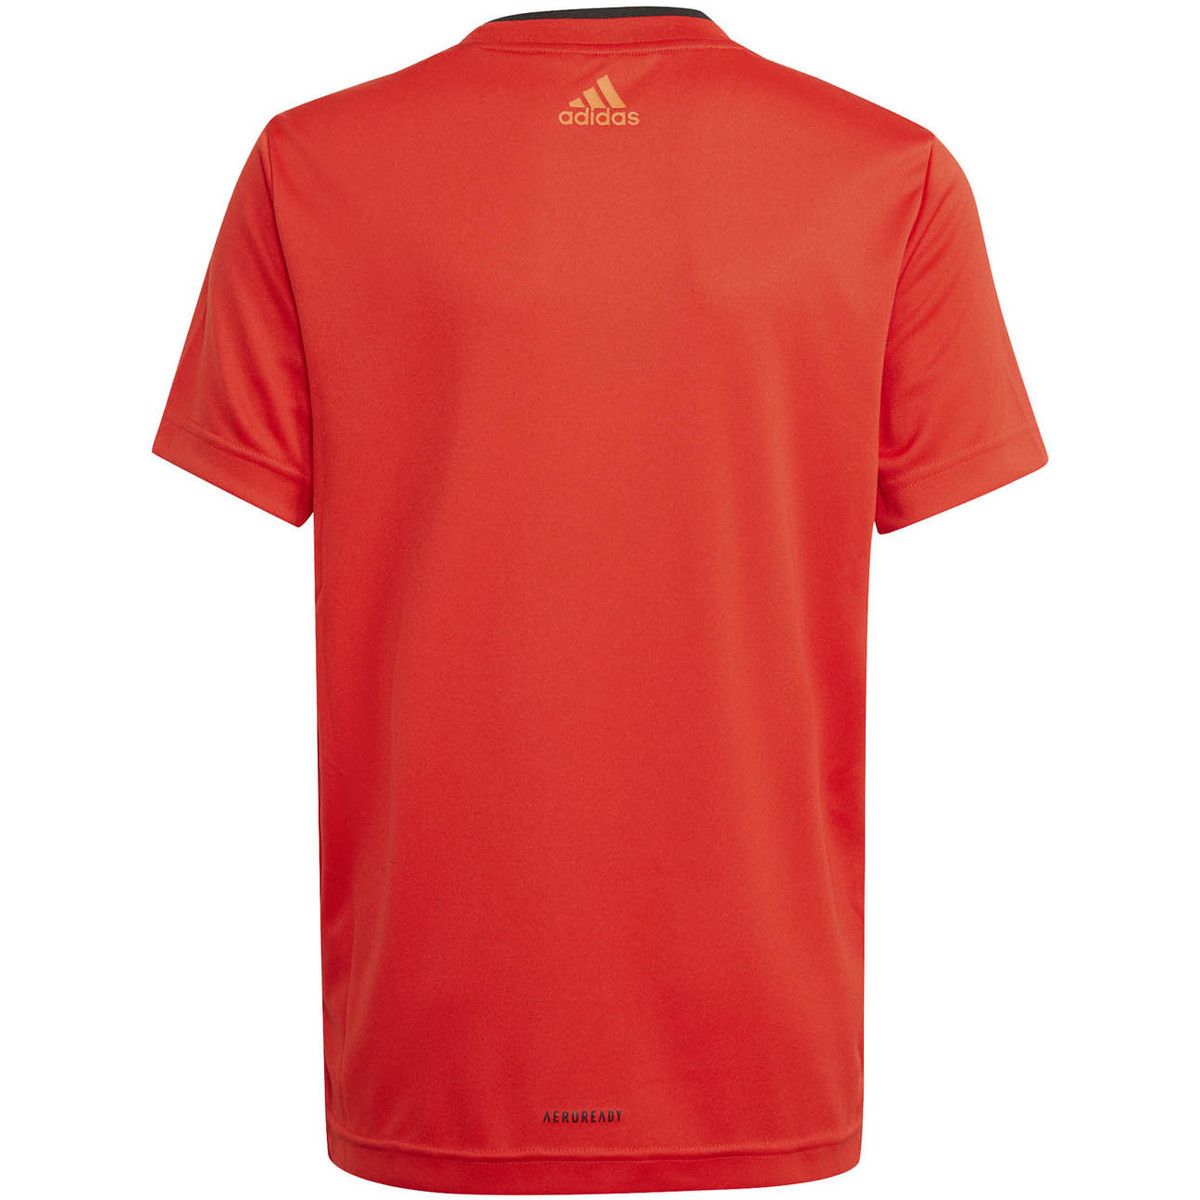 adidas Originals Rouge T-shirt Aeroready X Football-inspired o6vczXGS